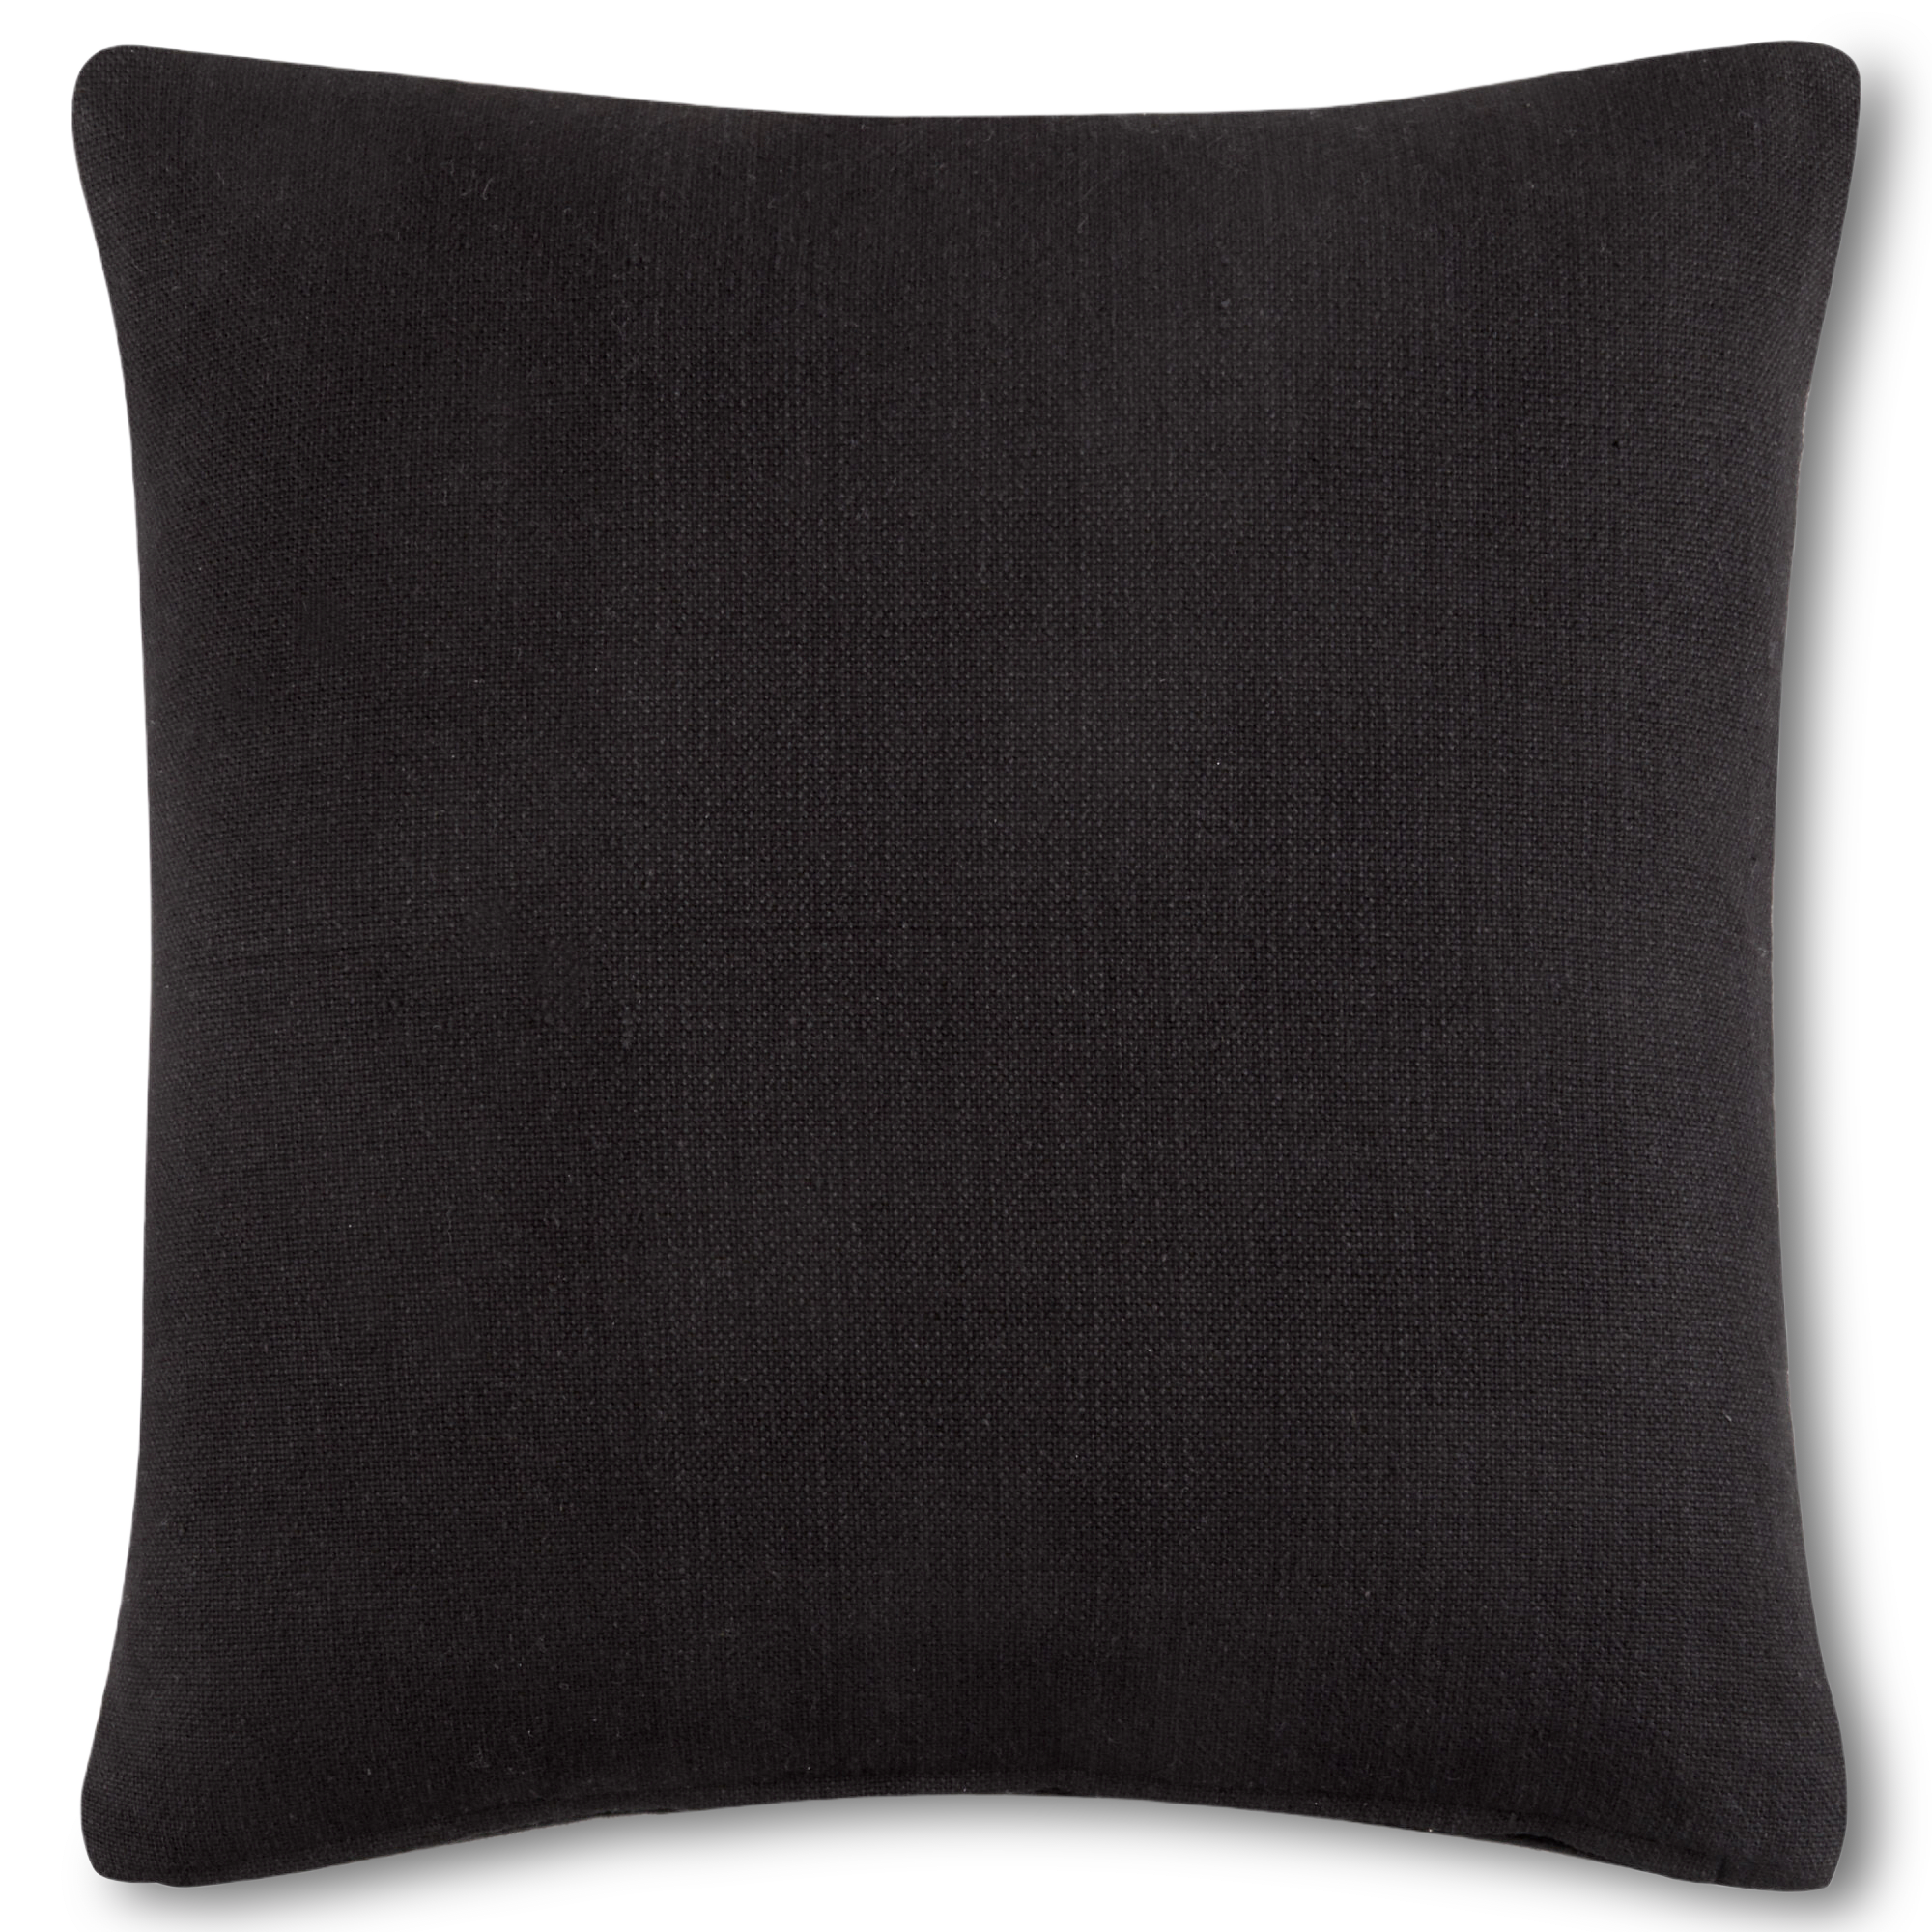 Hallan Decorative Black Pillow 